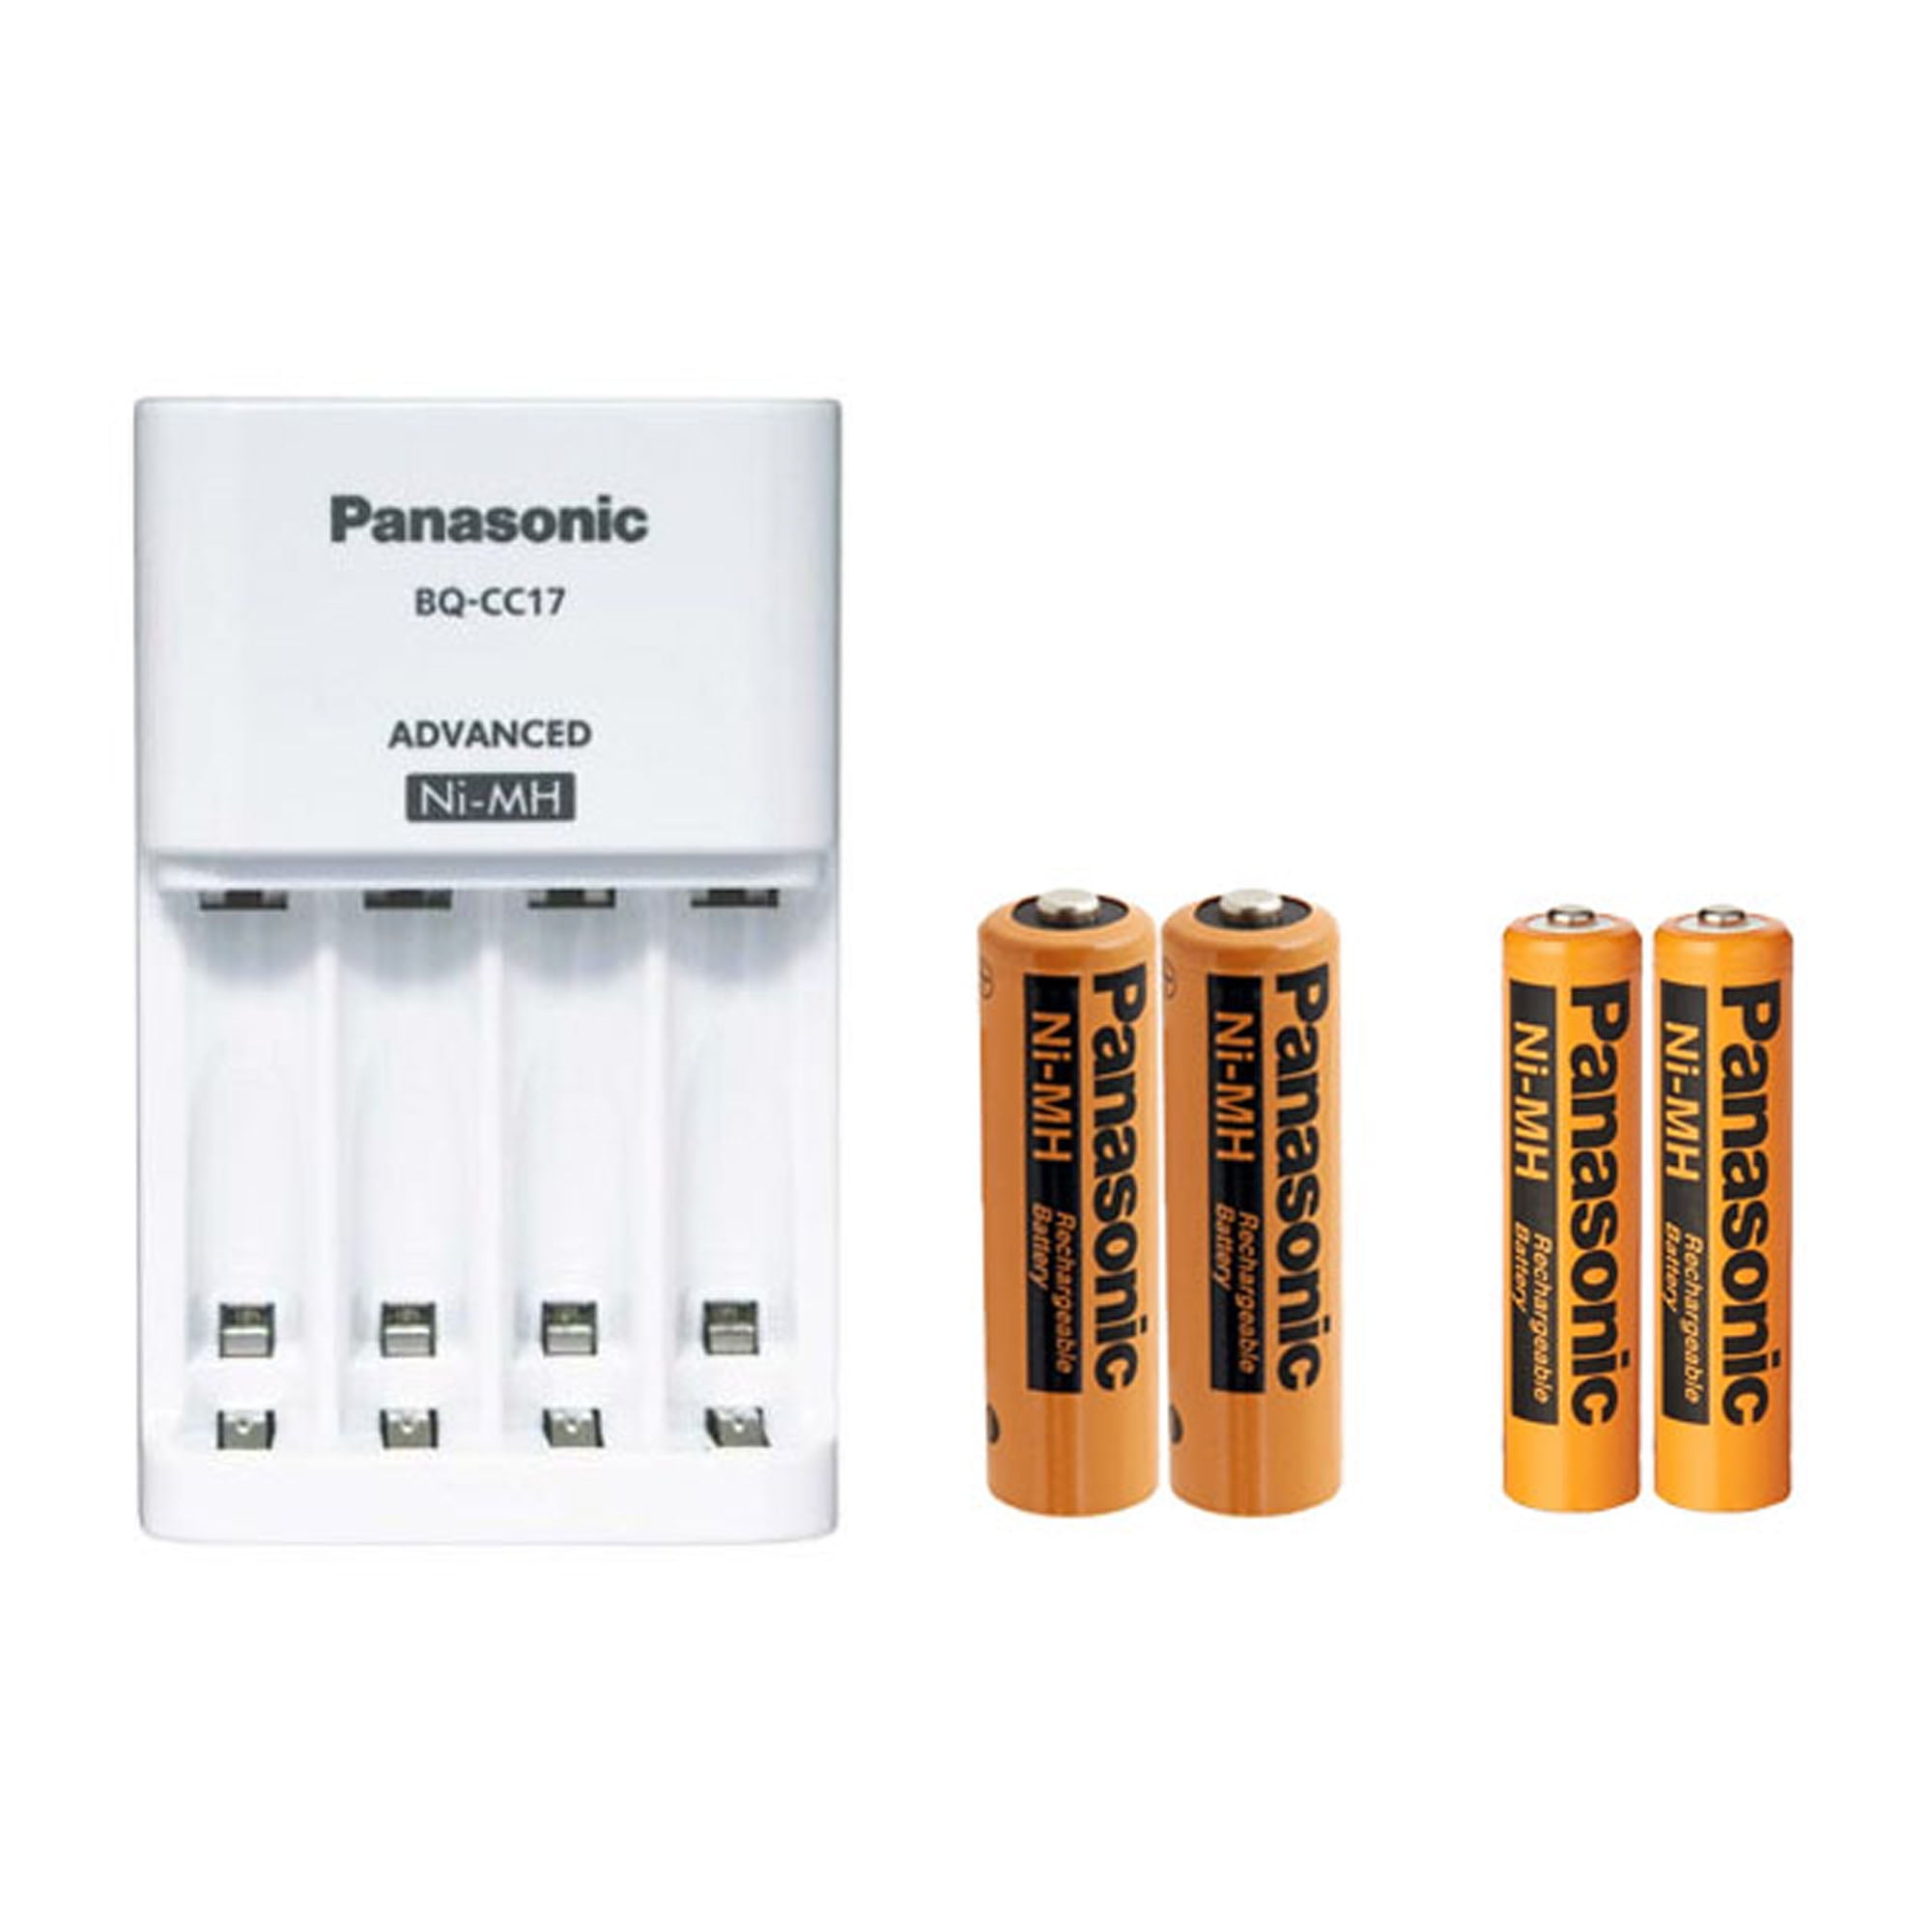 Panasonic Bq Cc17 Smart Battery Charger 2 Aa 2000mah 2 Aaa